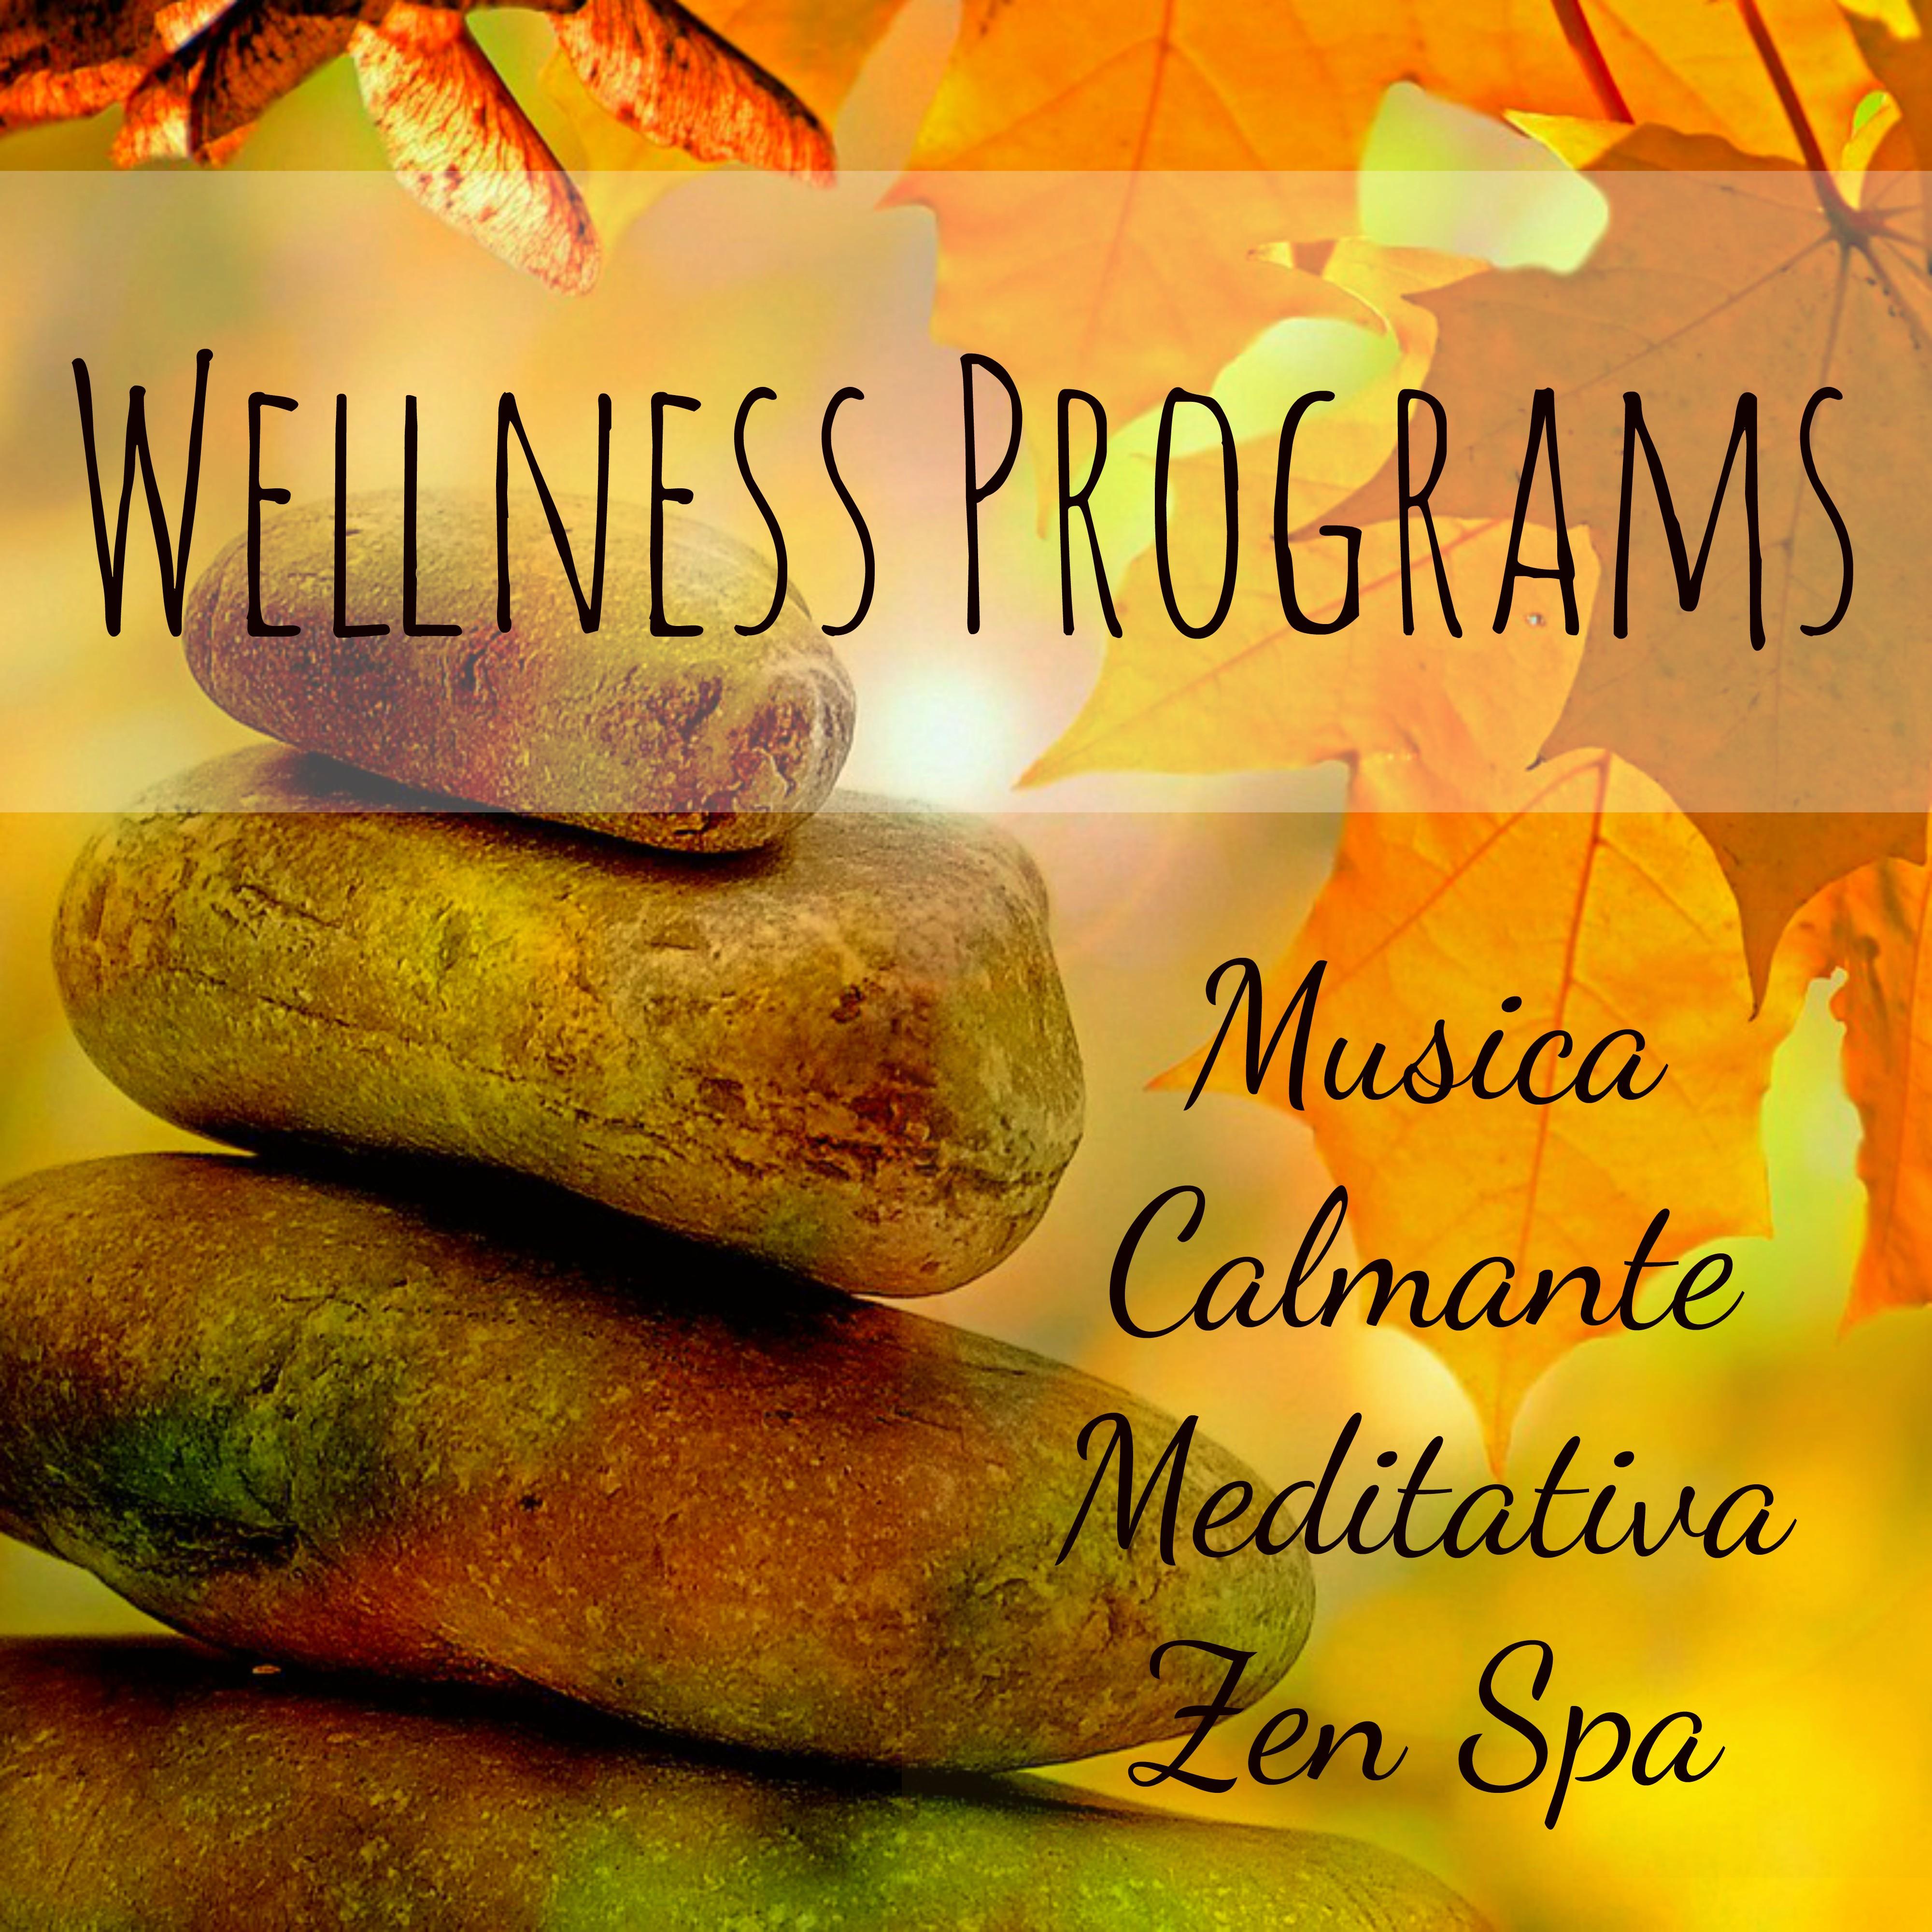 Wellness Programs